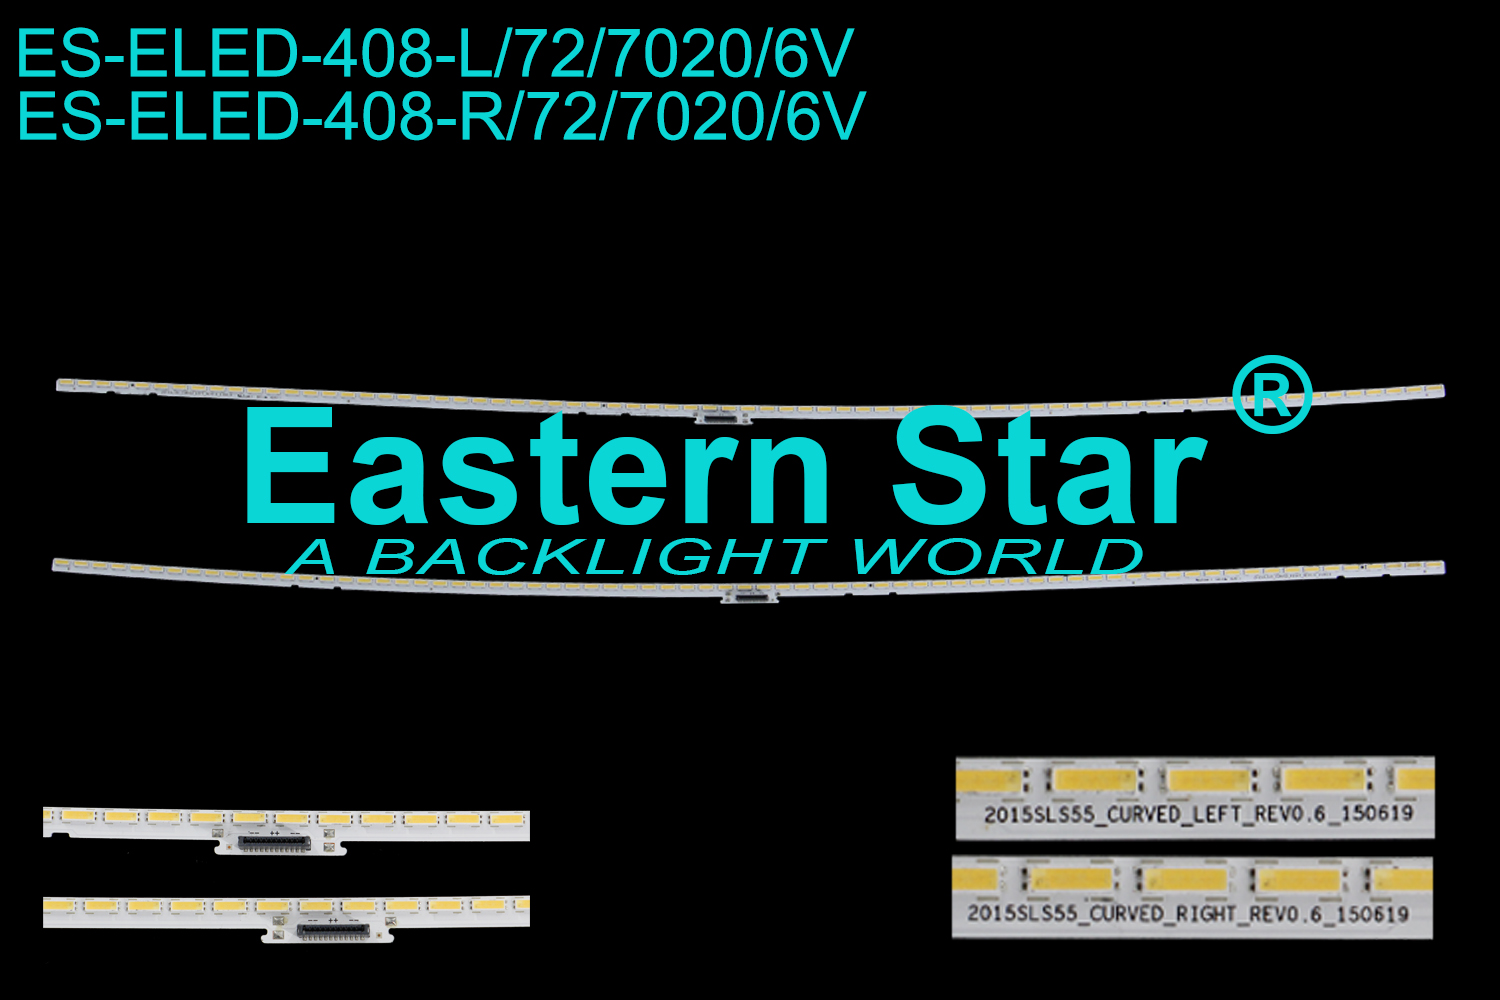 ES-ELED-408 ELED/EDGE TV backlight use for 55'' Samsung 2015SLS55_CURVED_RIGHT_REV0.6_150619 LED STRIPS(2)